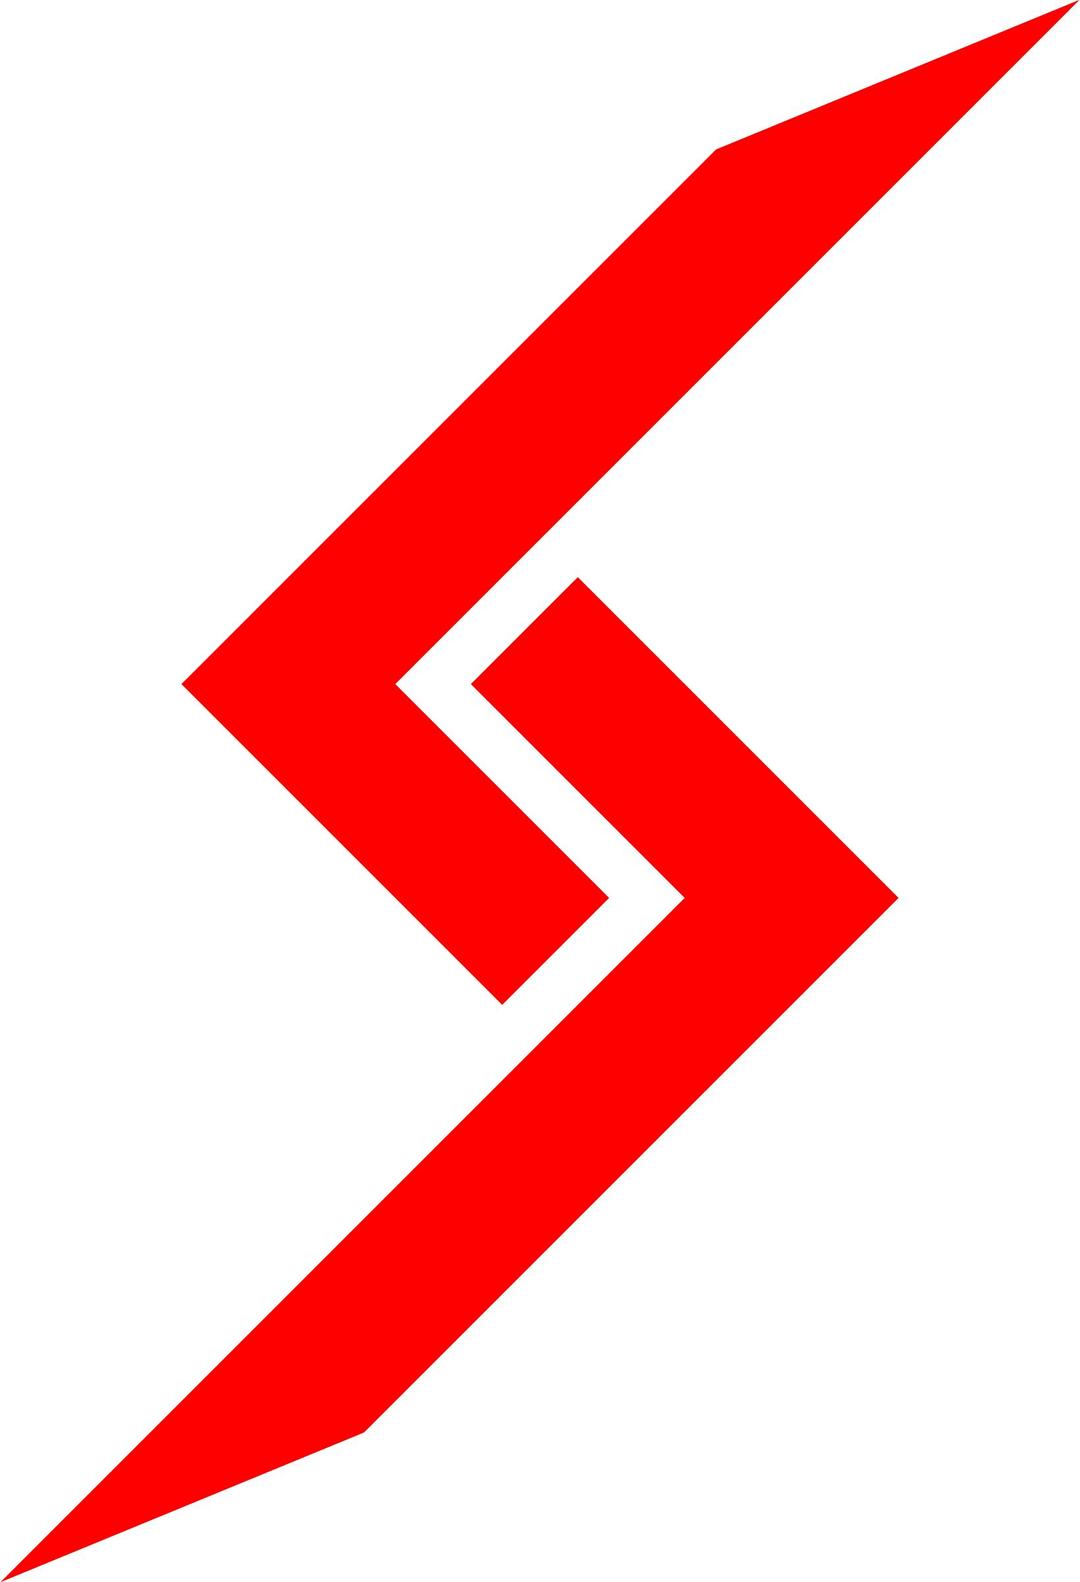 Digital Storm logo png transparent